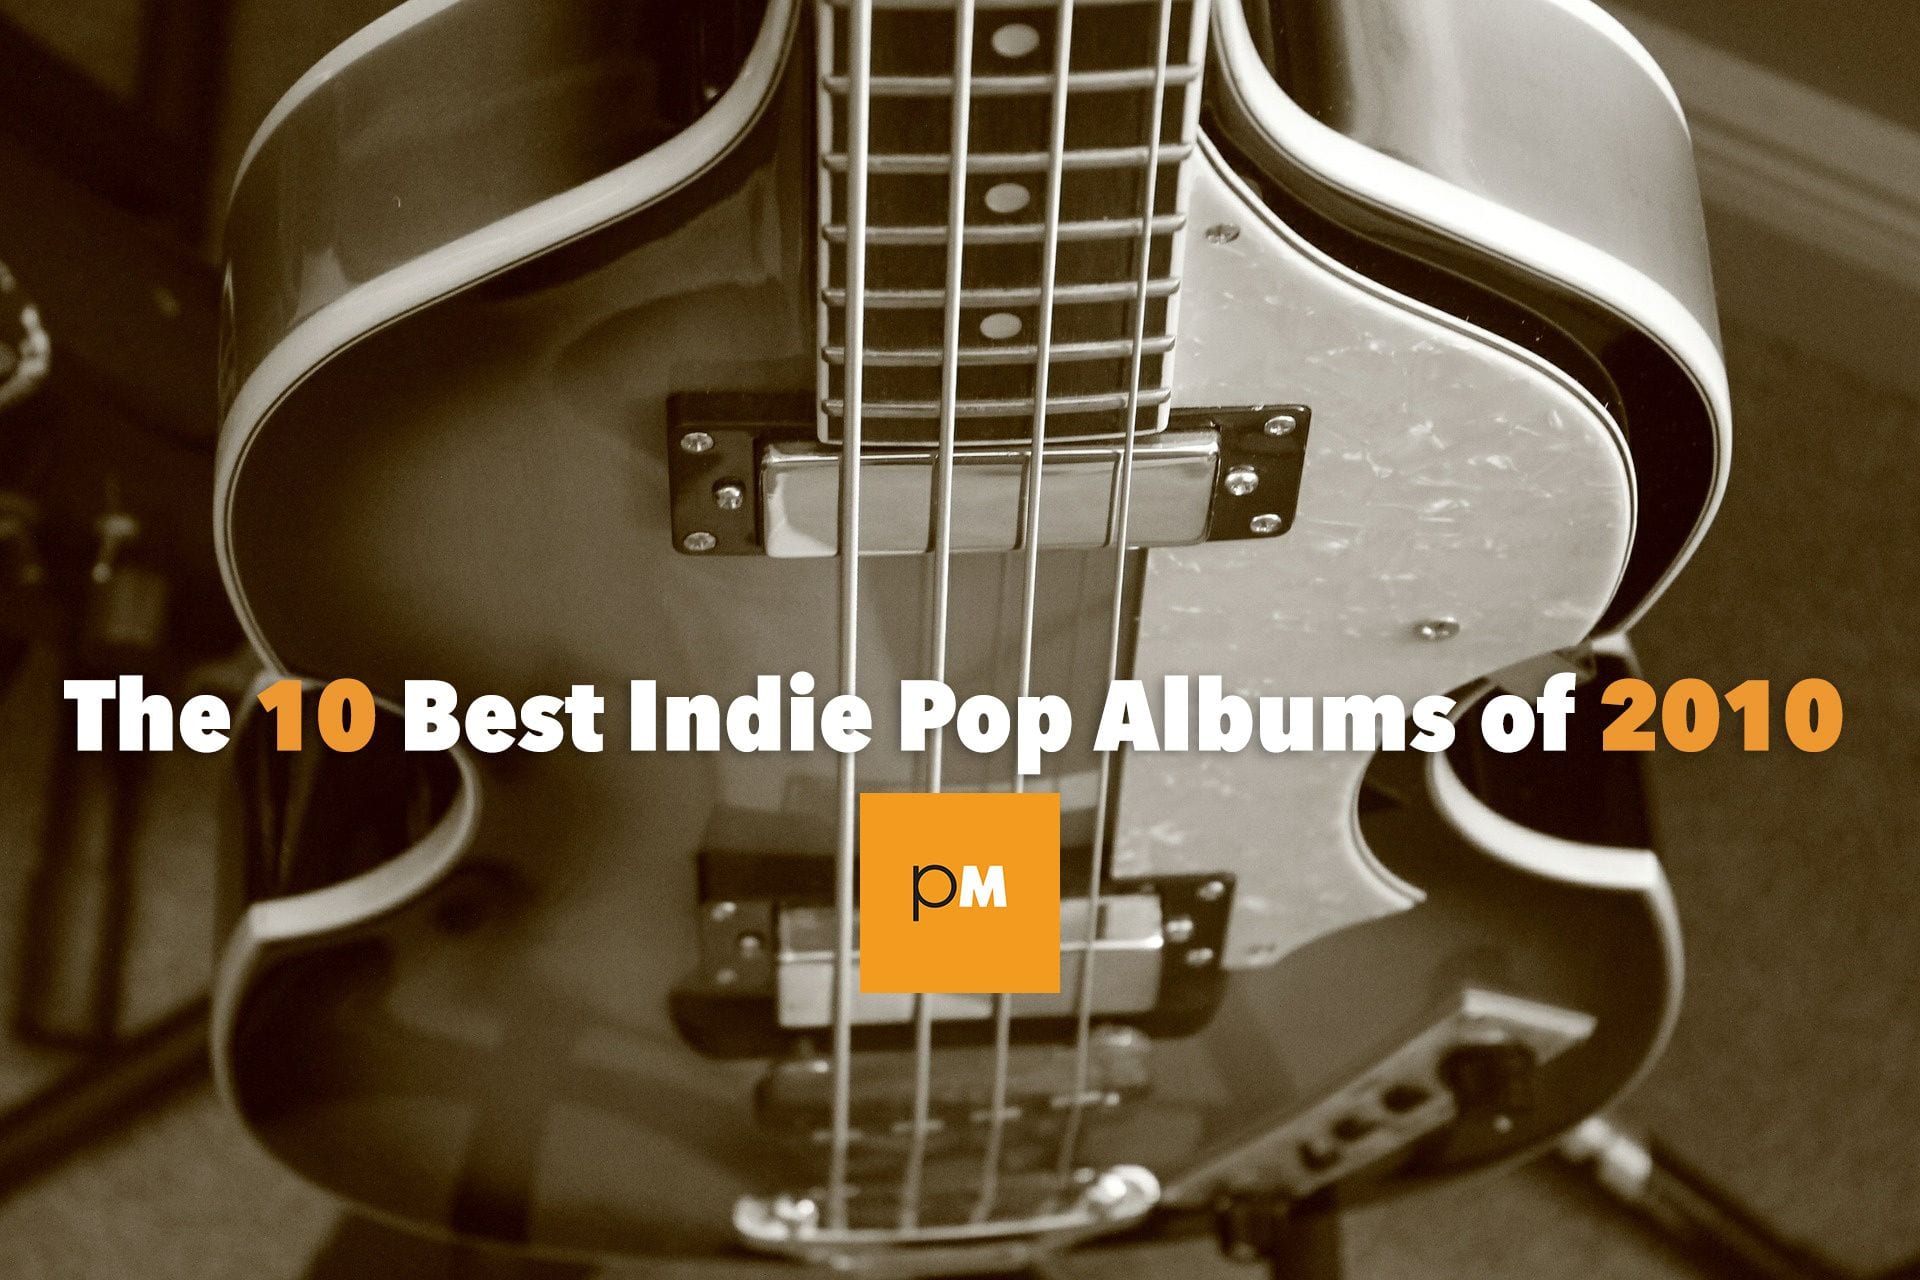 The 10 Best Indie Pop Albums of 2010